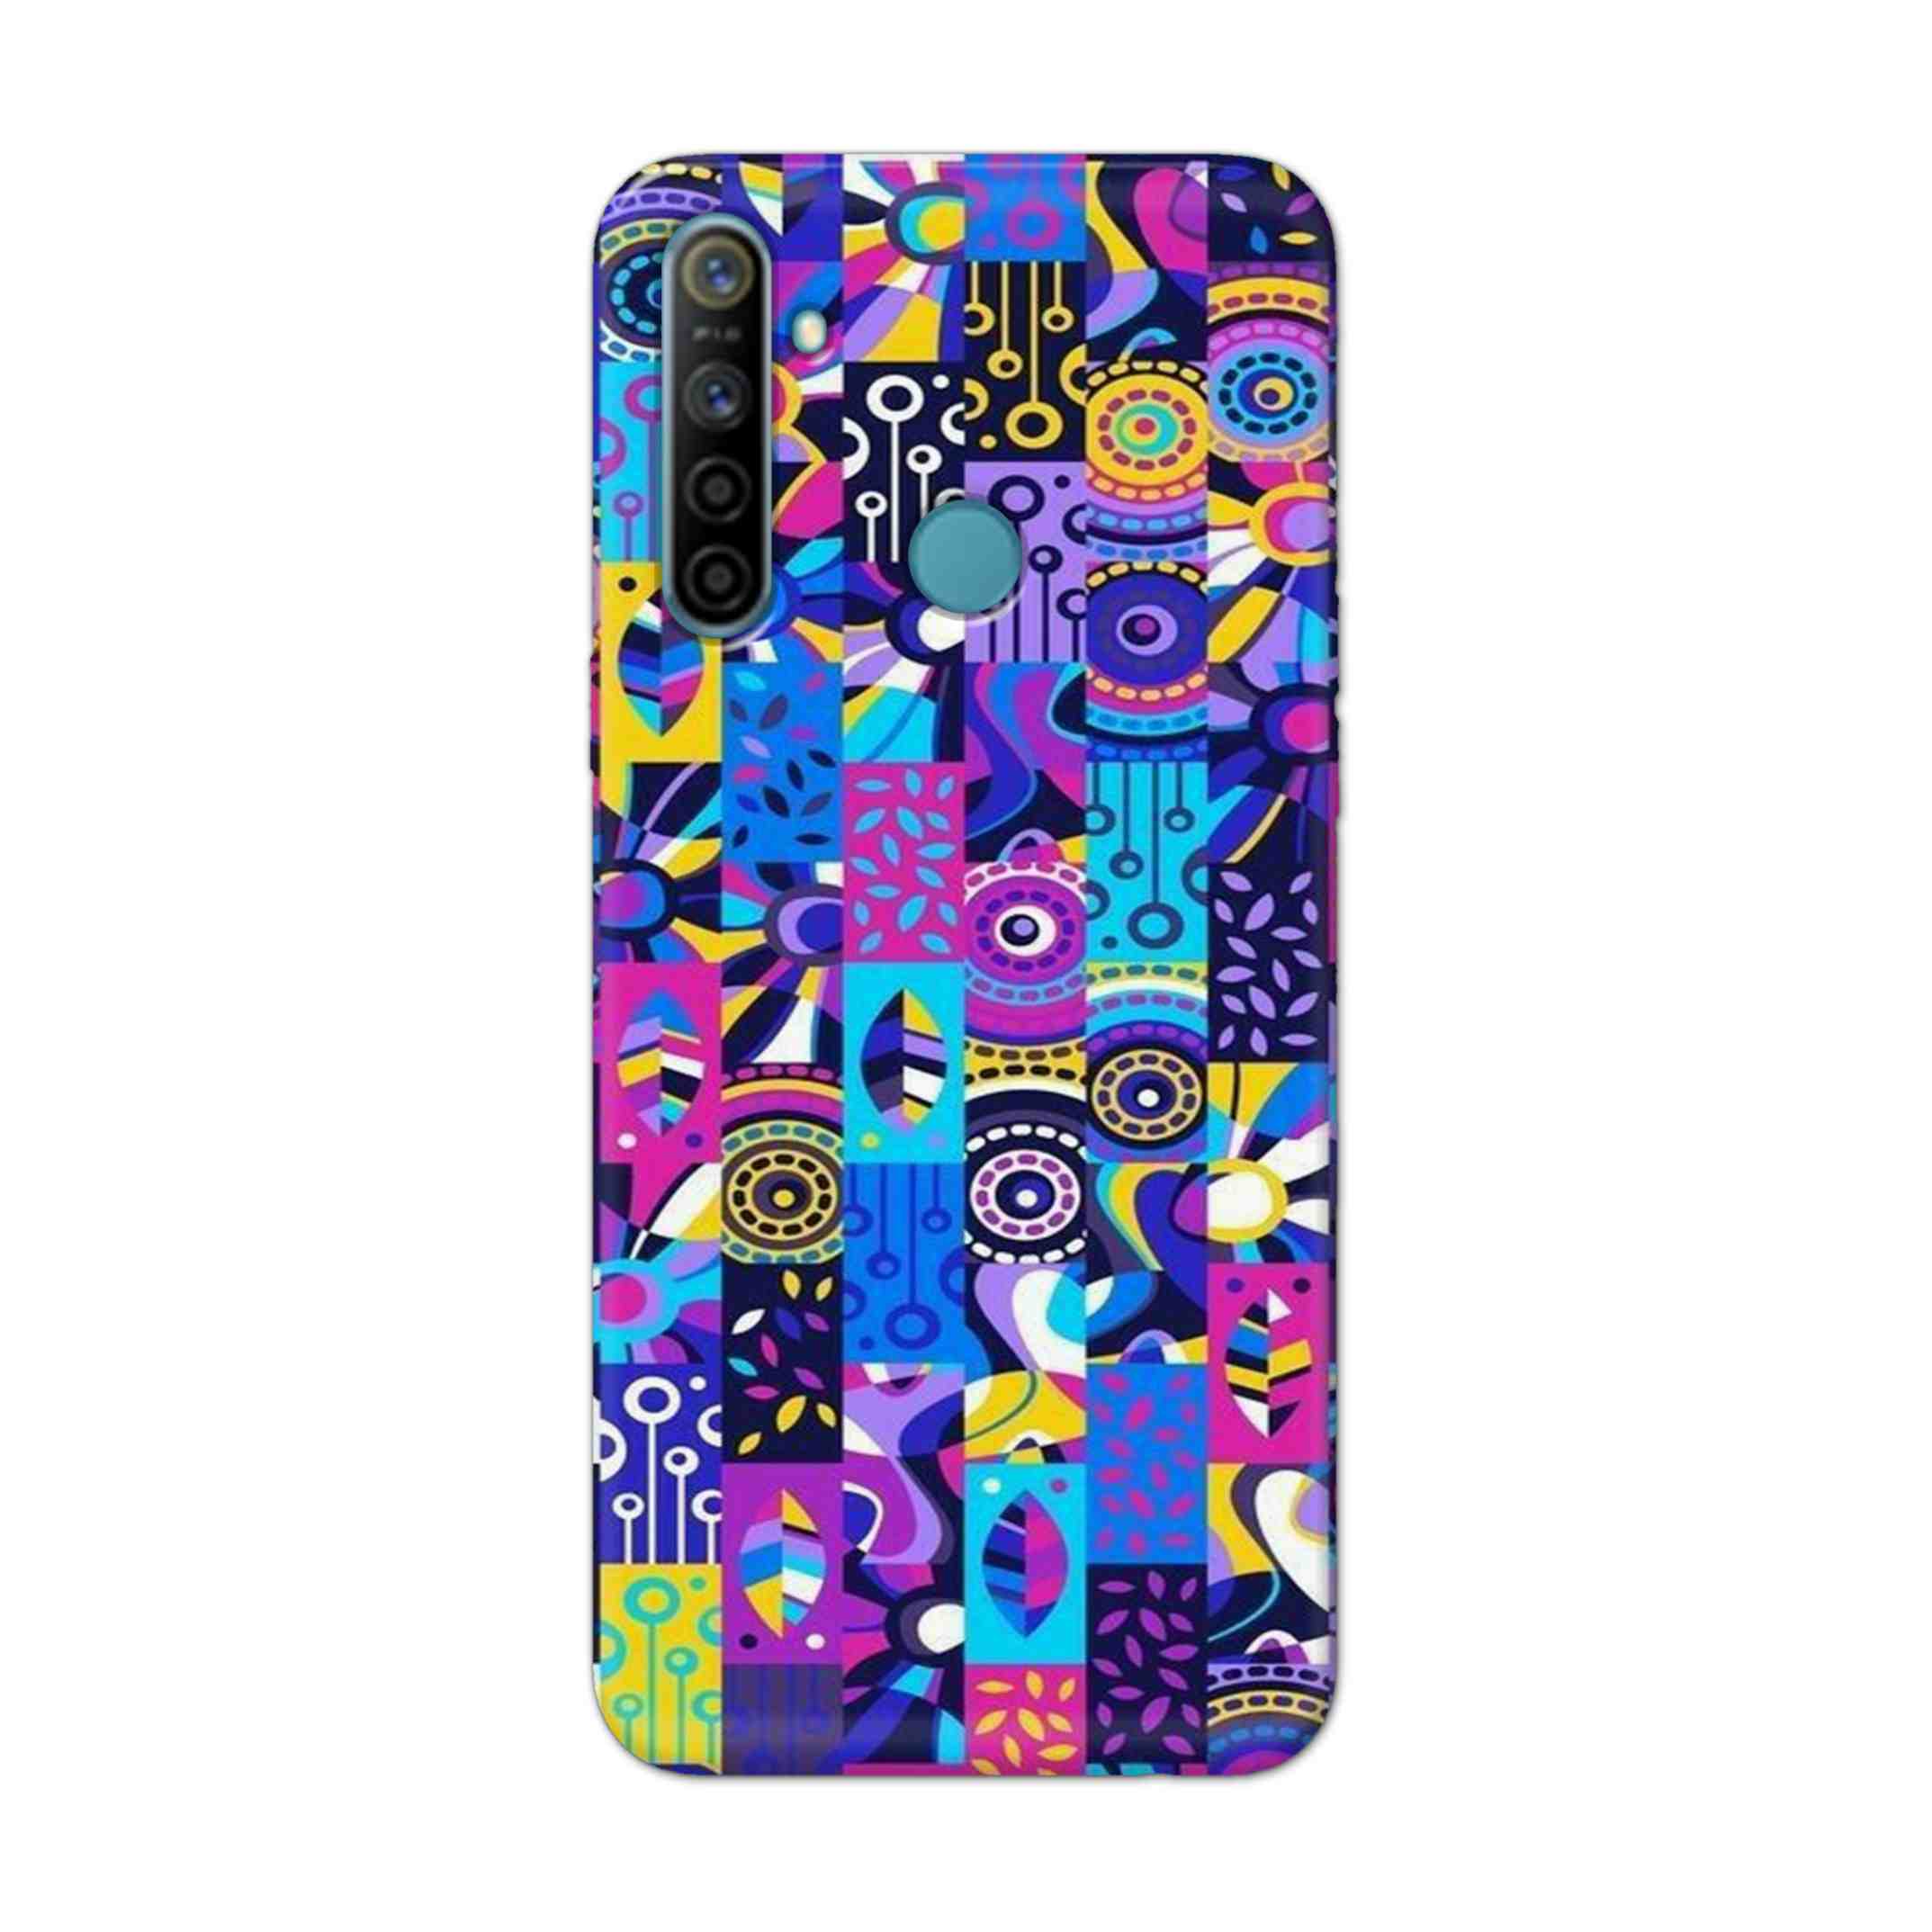 Buy Rainbow Art Hard Back Mobile Phone Case Cover For Realme 5i Online